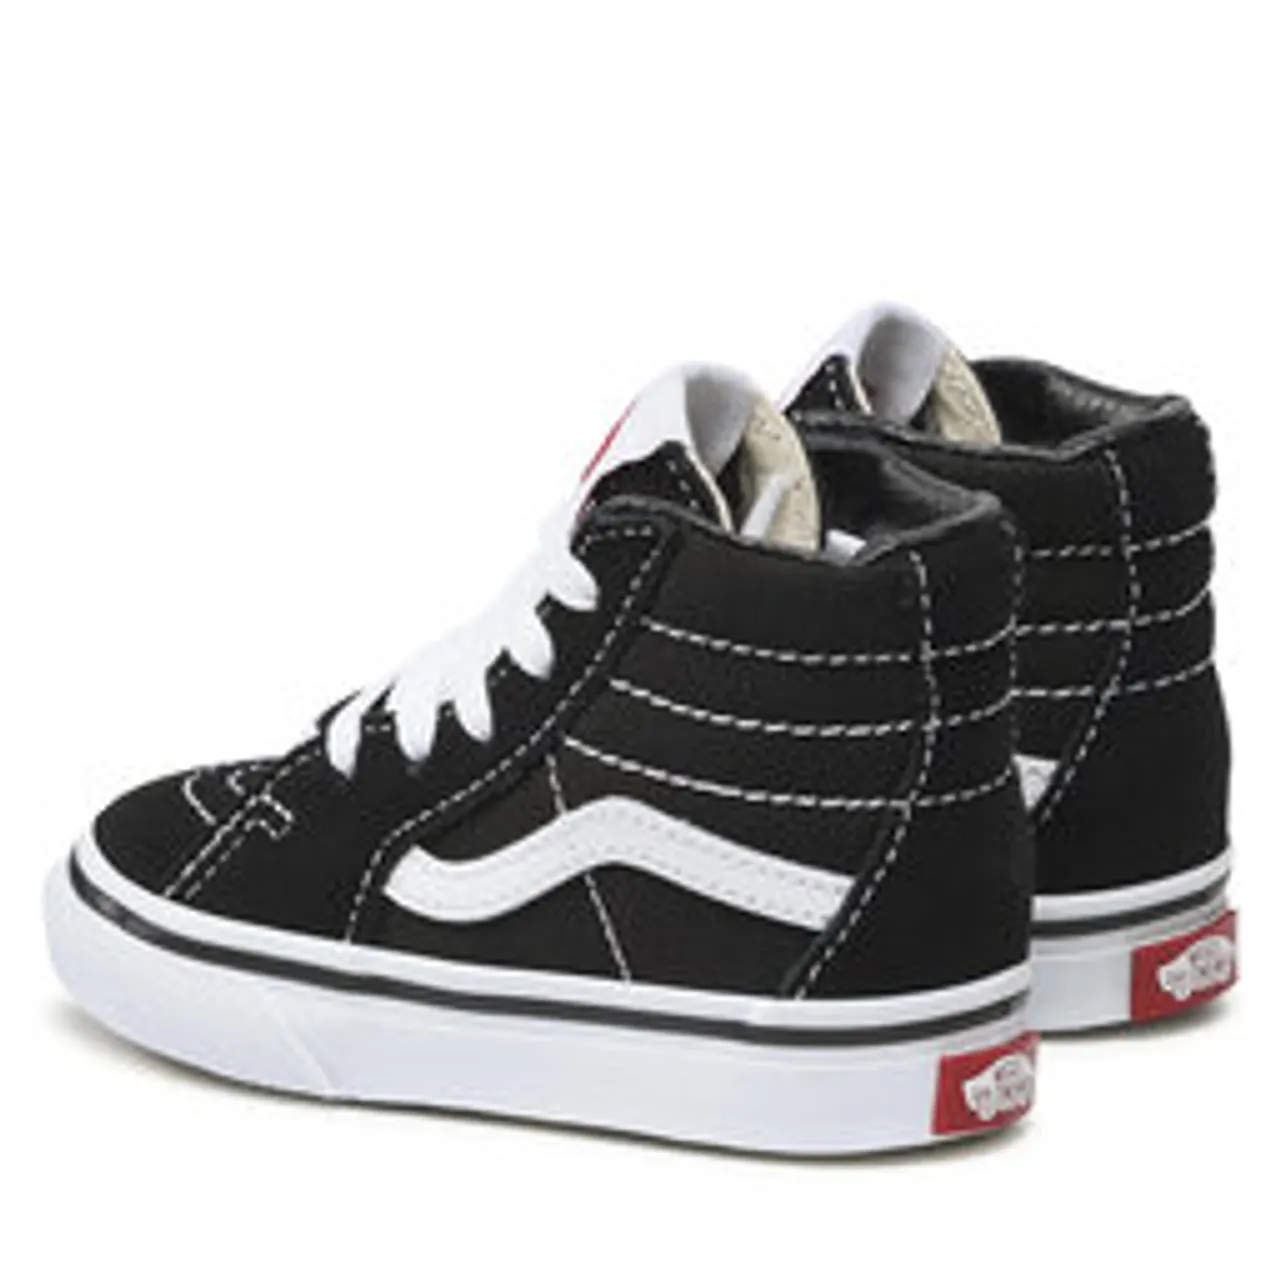 Sneakers Vans Sk8-Hi VN0A3TFX6BT1 Black/True White 1